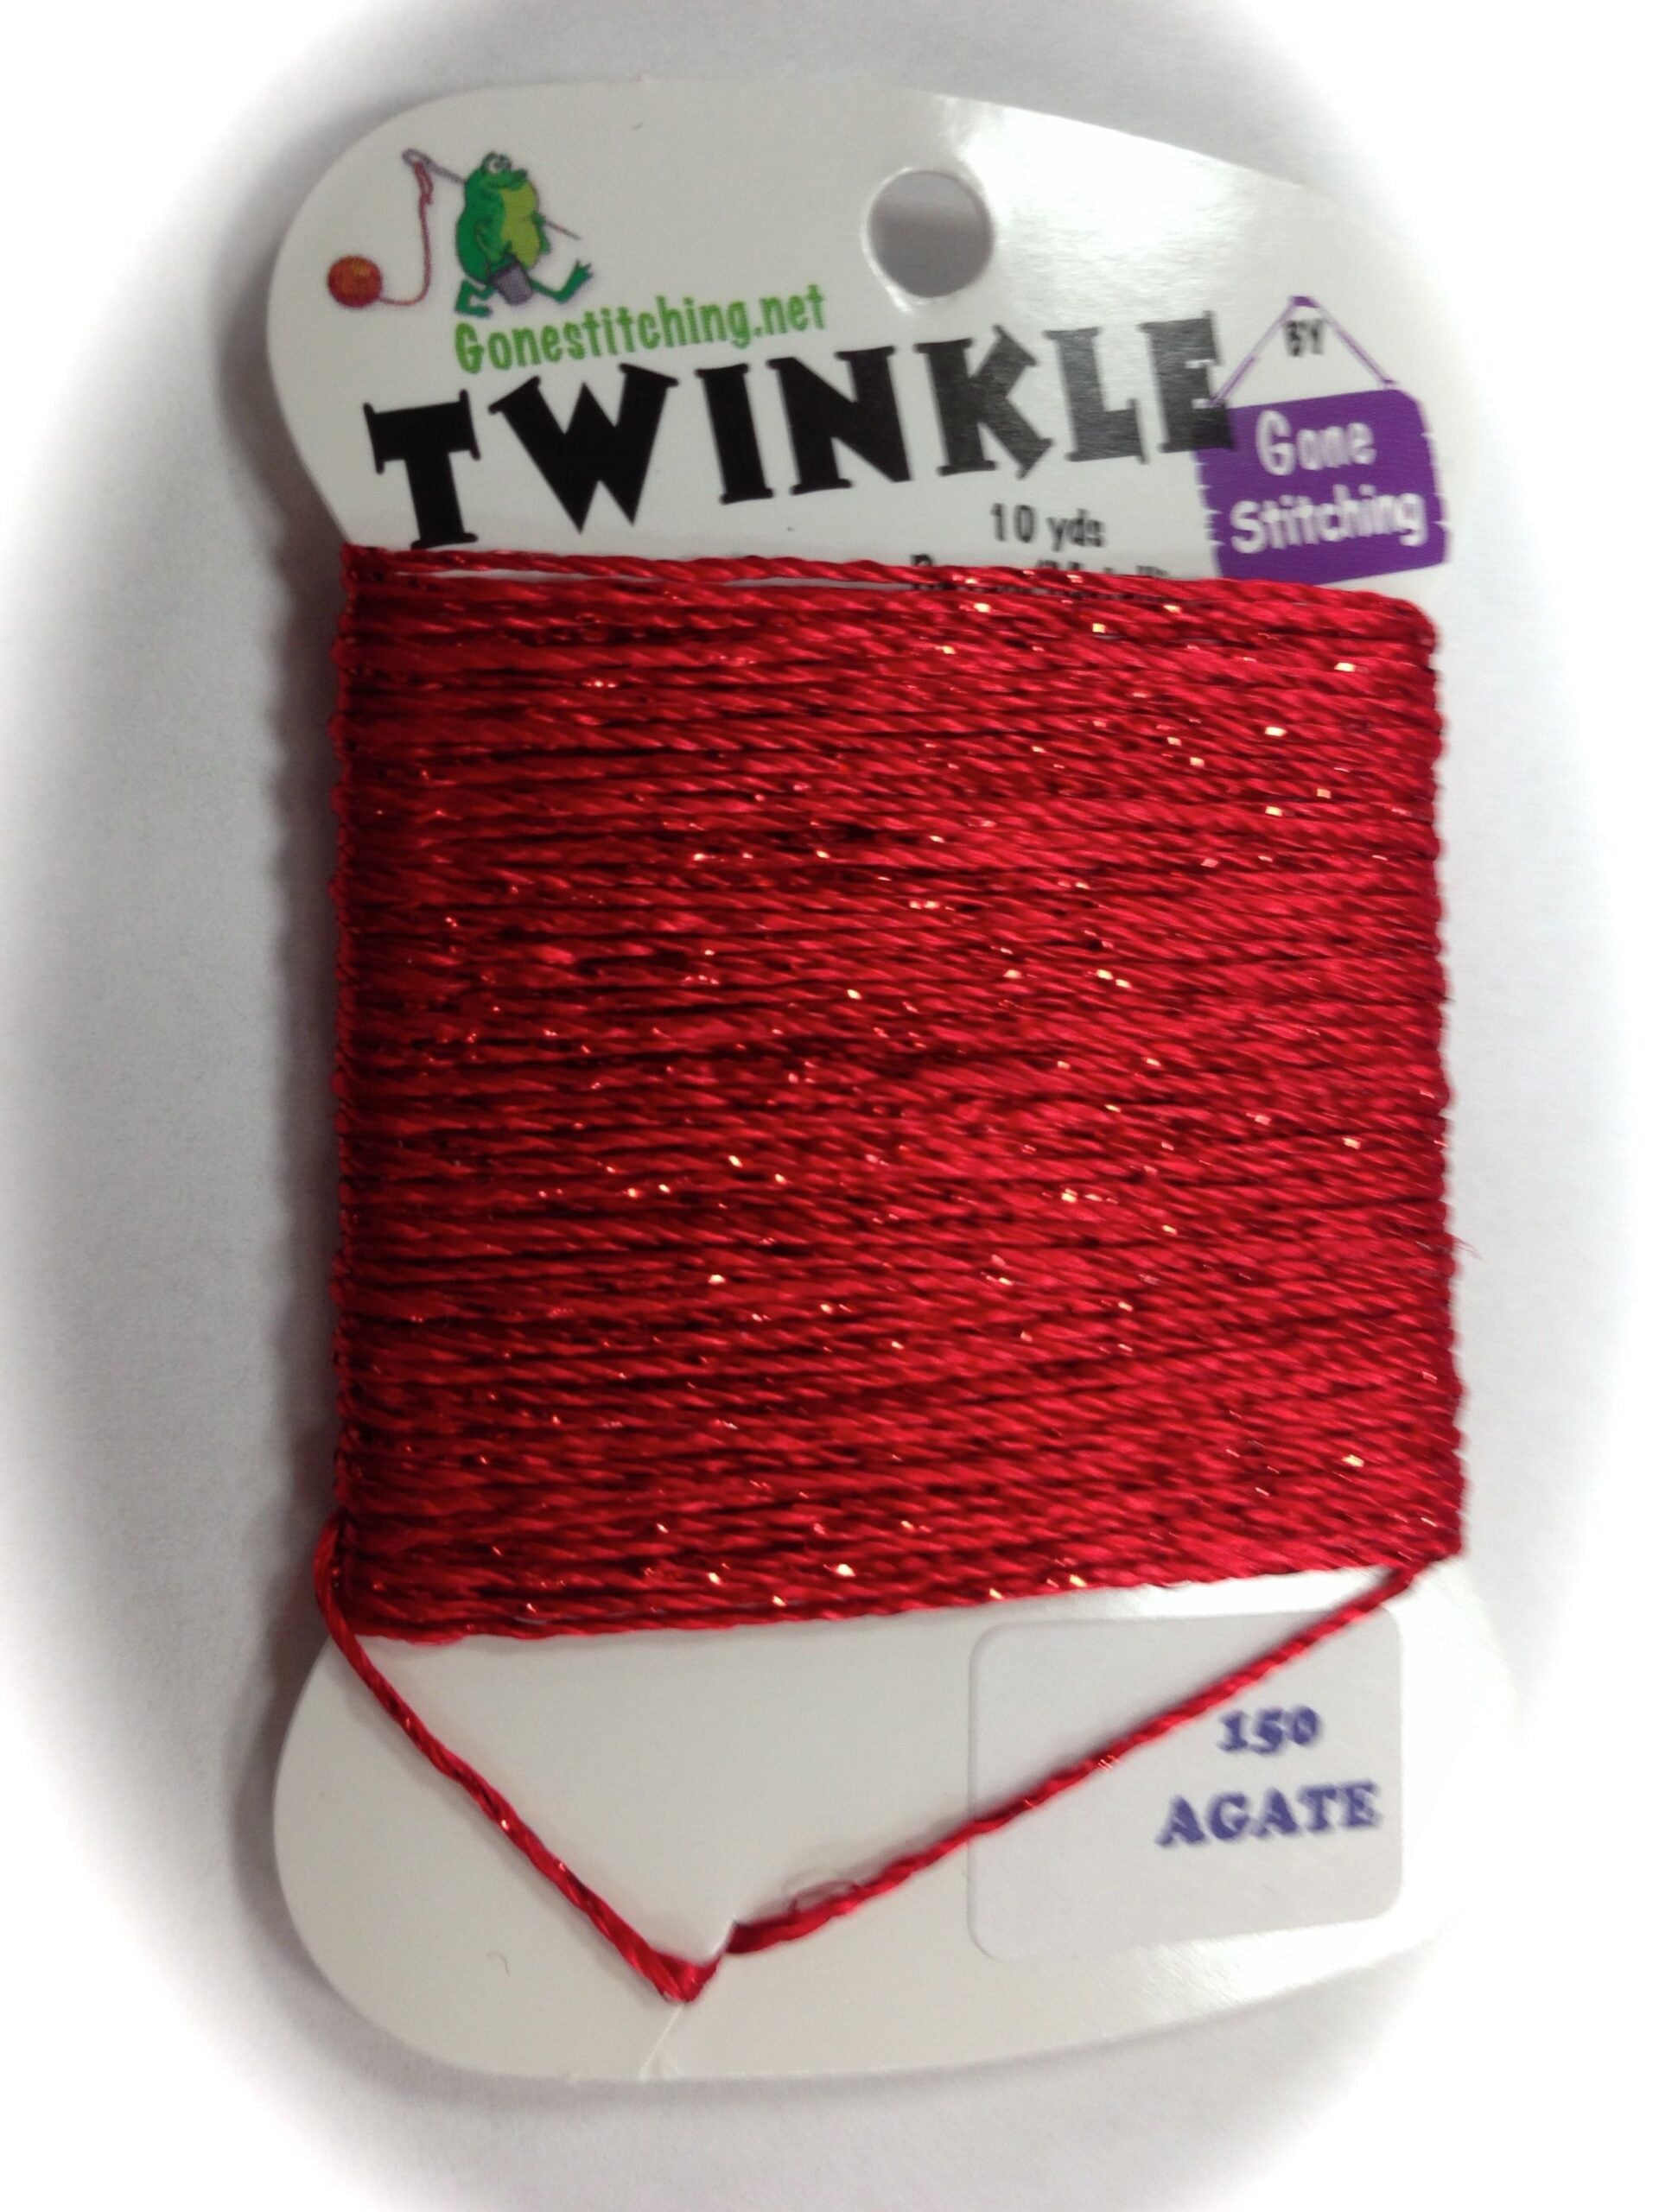 GS - Twinkle - 0150 - Agate